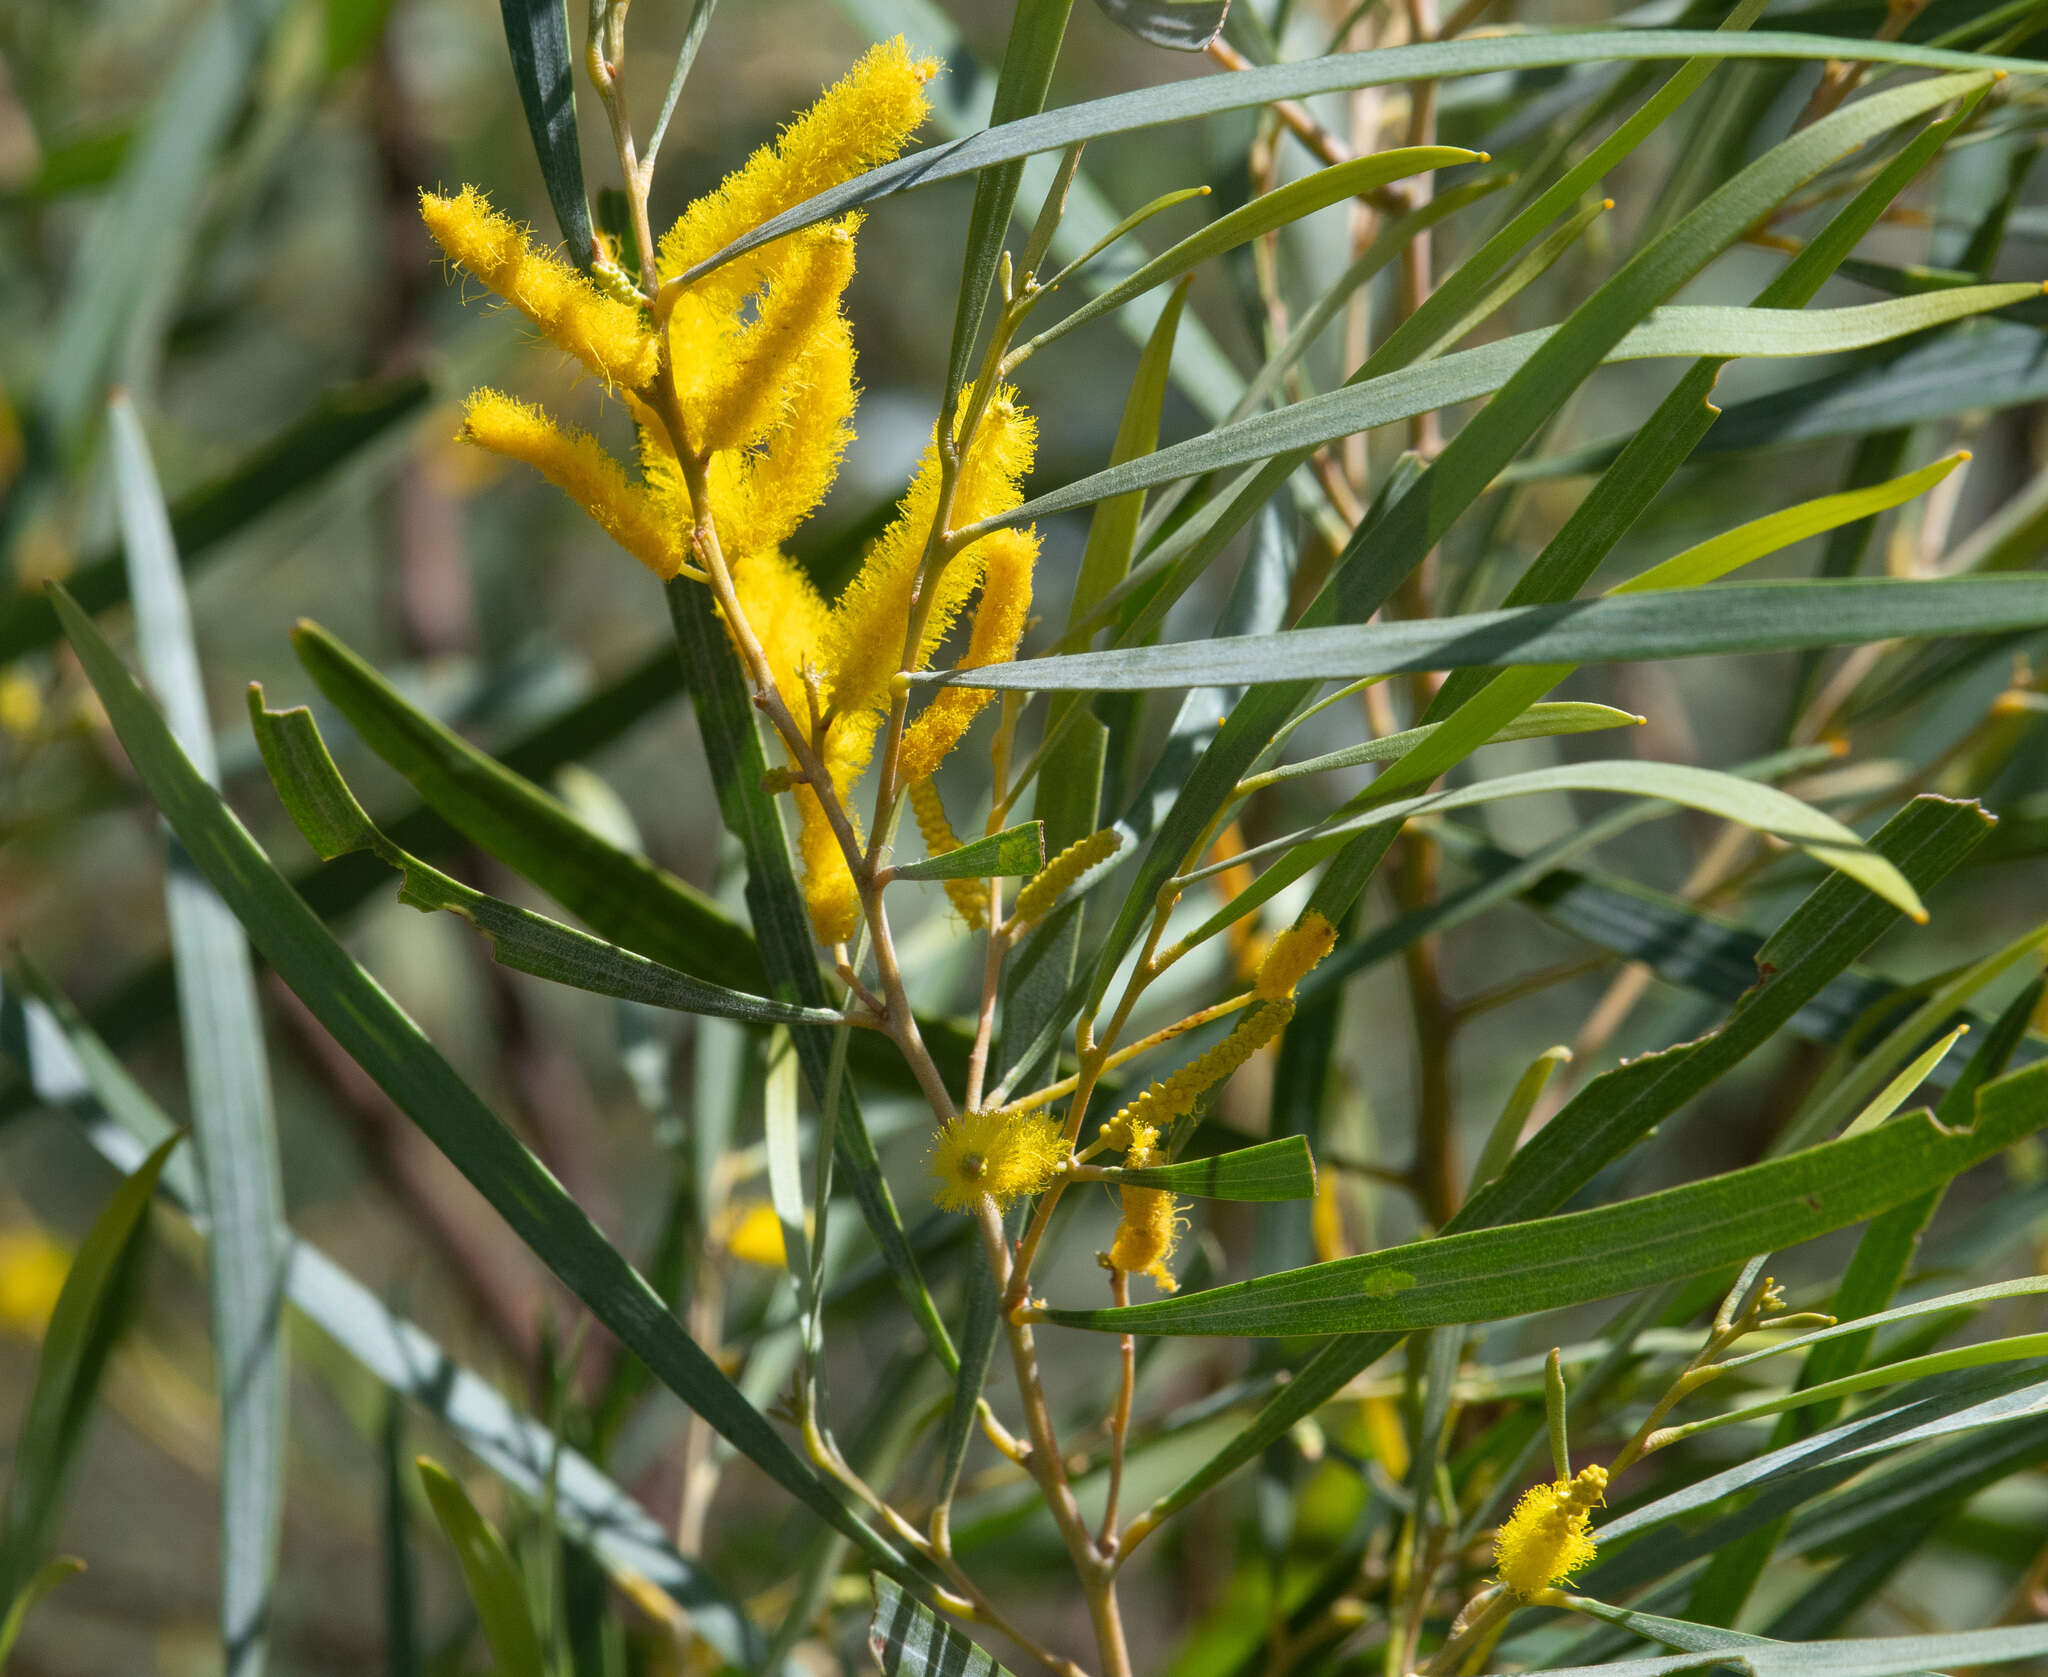 Image of Acacia torulosa Benth.